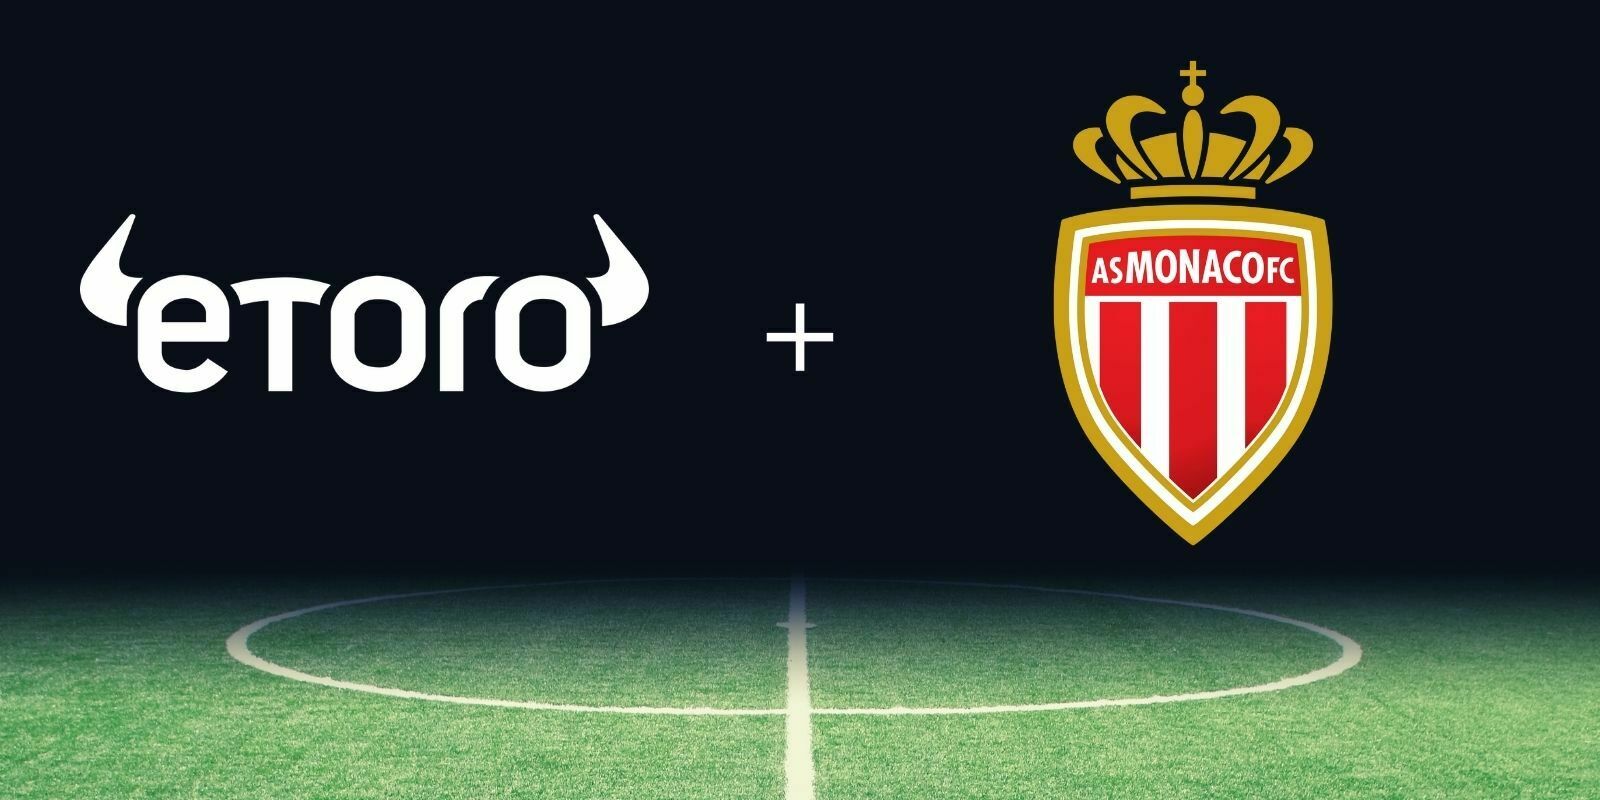 La plateforme eToro devient partenaire principal de l’AS Monaco